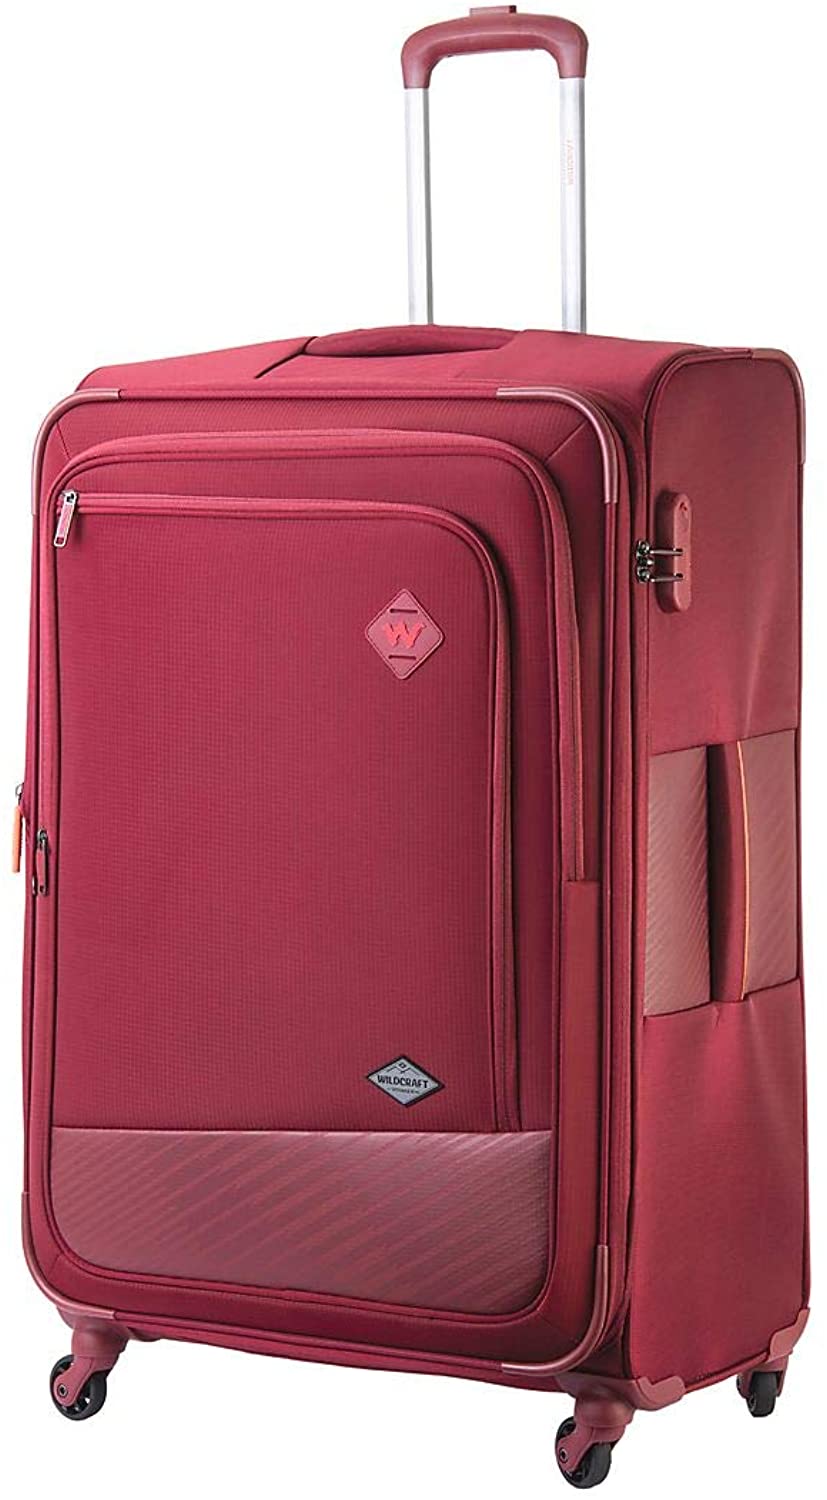 Murano Luggage Trolley Bags Set of 6 Pieces Beige - متجر سعة سفر للشنط I  أفضل وأجود انواع حقائب و شنط السفر ودبش العروس